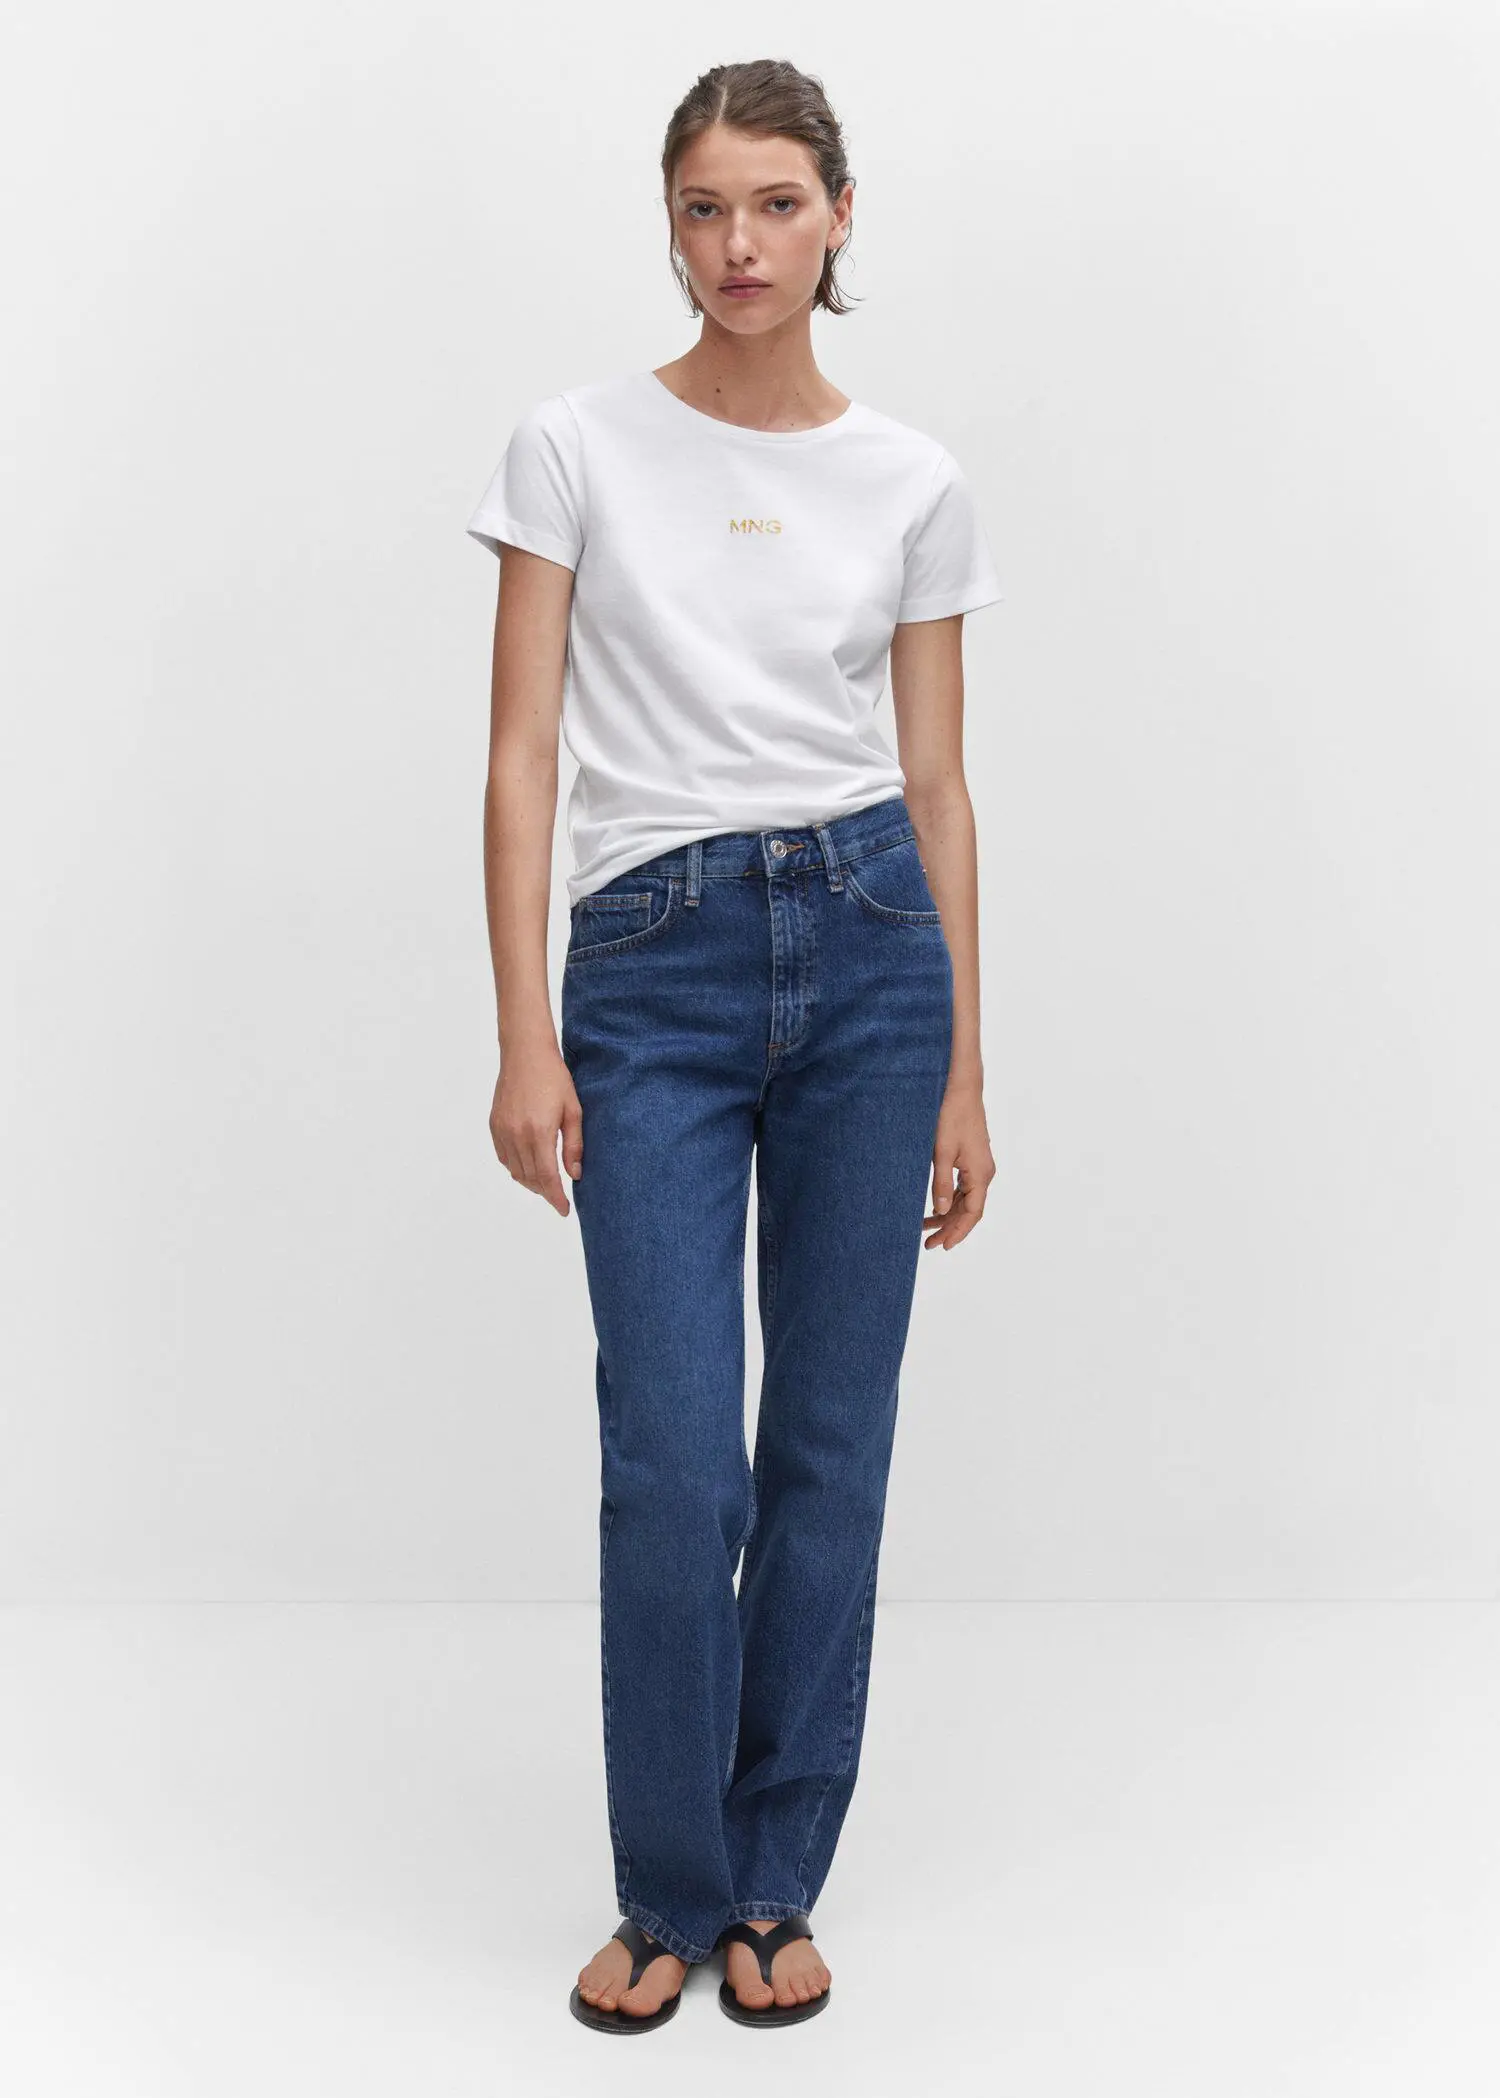 Mango Metallic logo T-shirt. a woman in white shirt and blue jeans. 